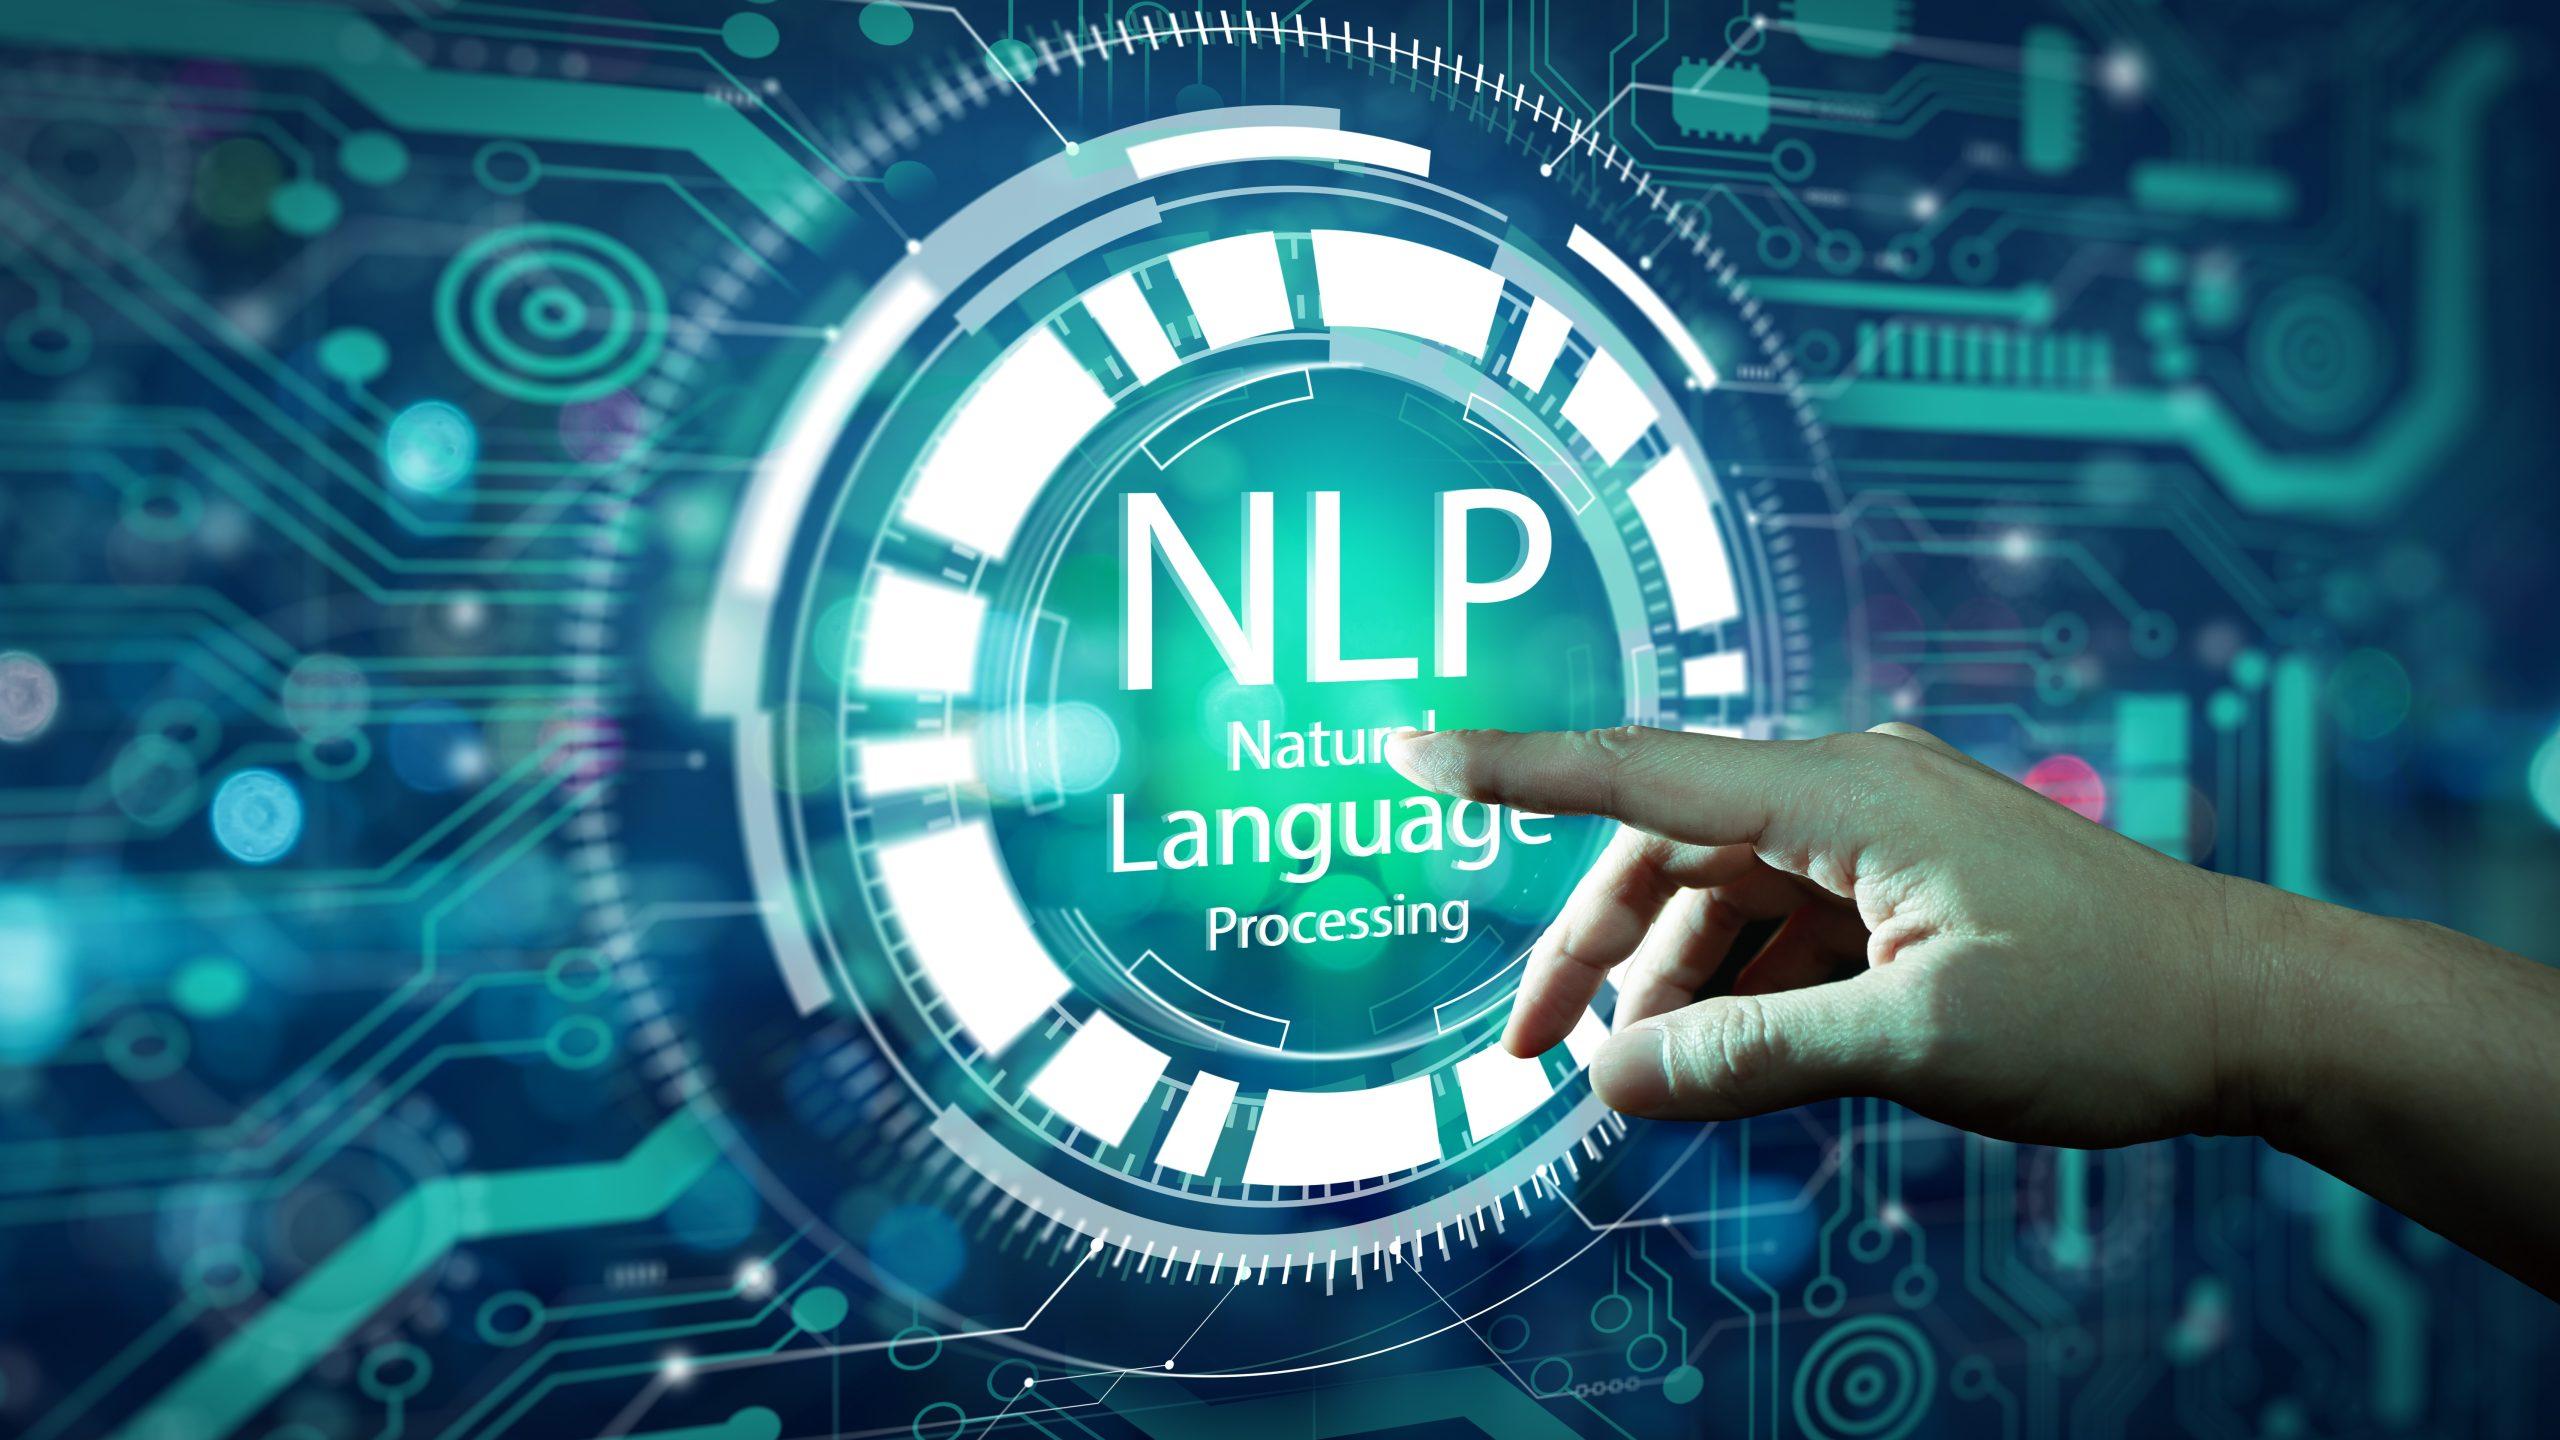 NLP Natural Language Processing cognitive computing technology concept.